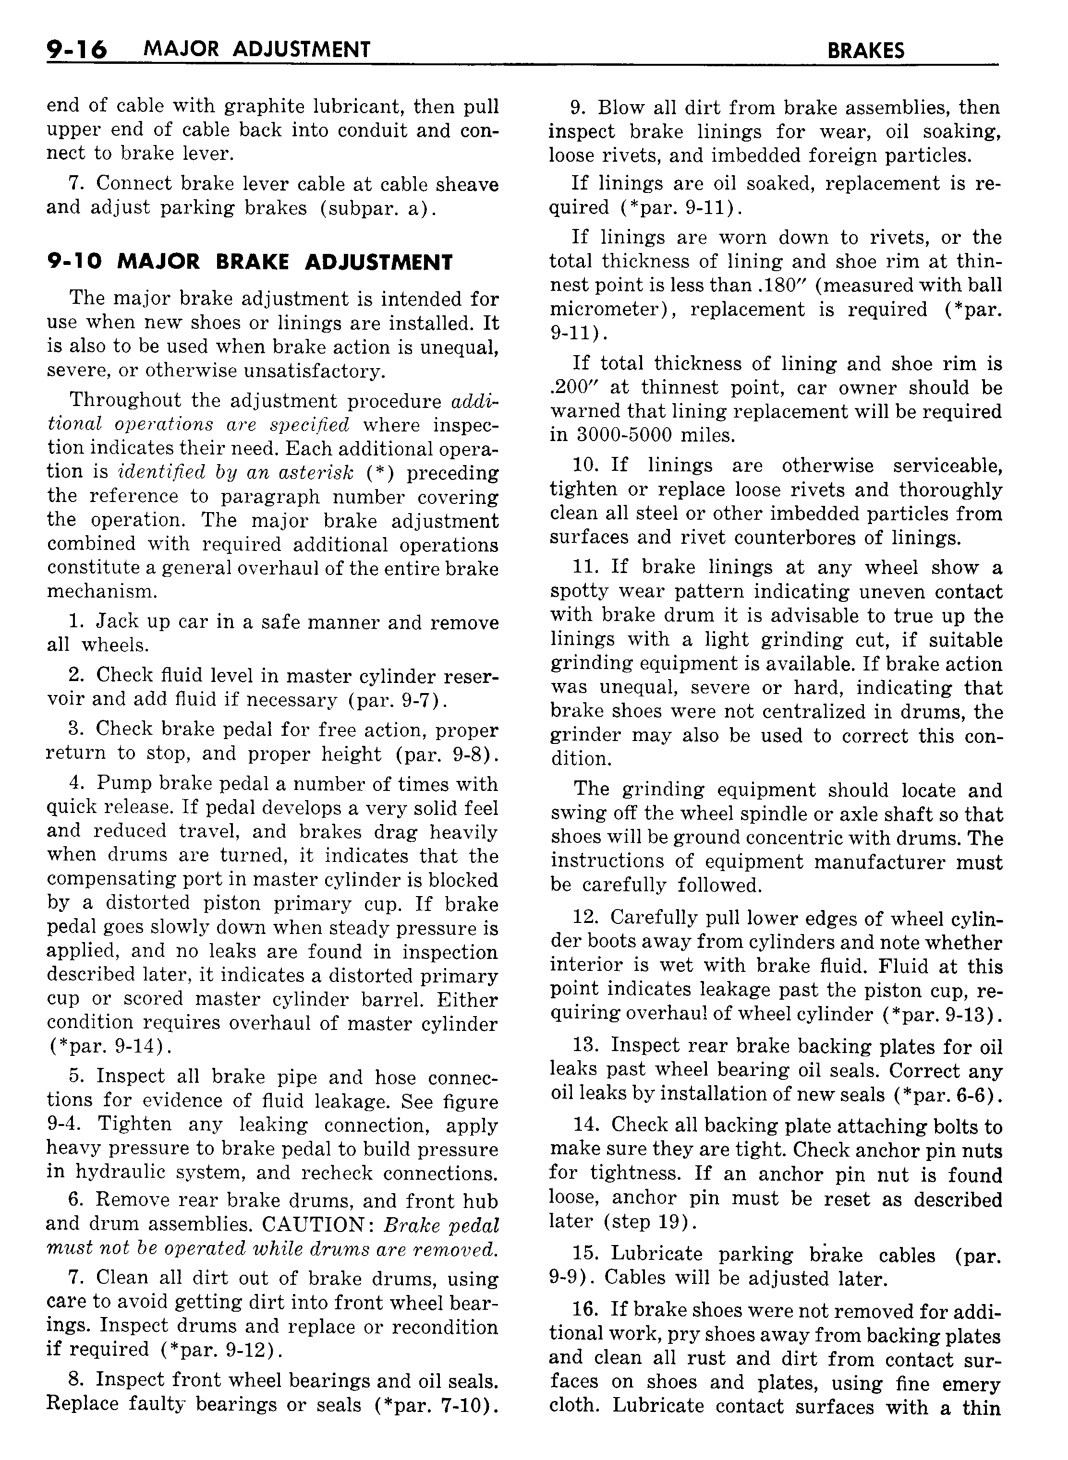 n_10 1957 Buick Shop Manual - Brakes-016-016.jpg